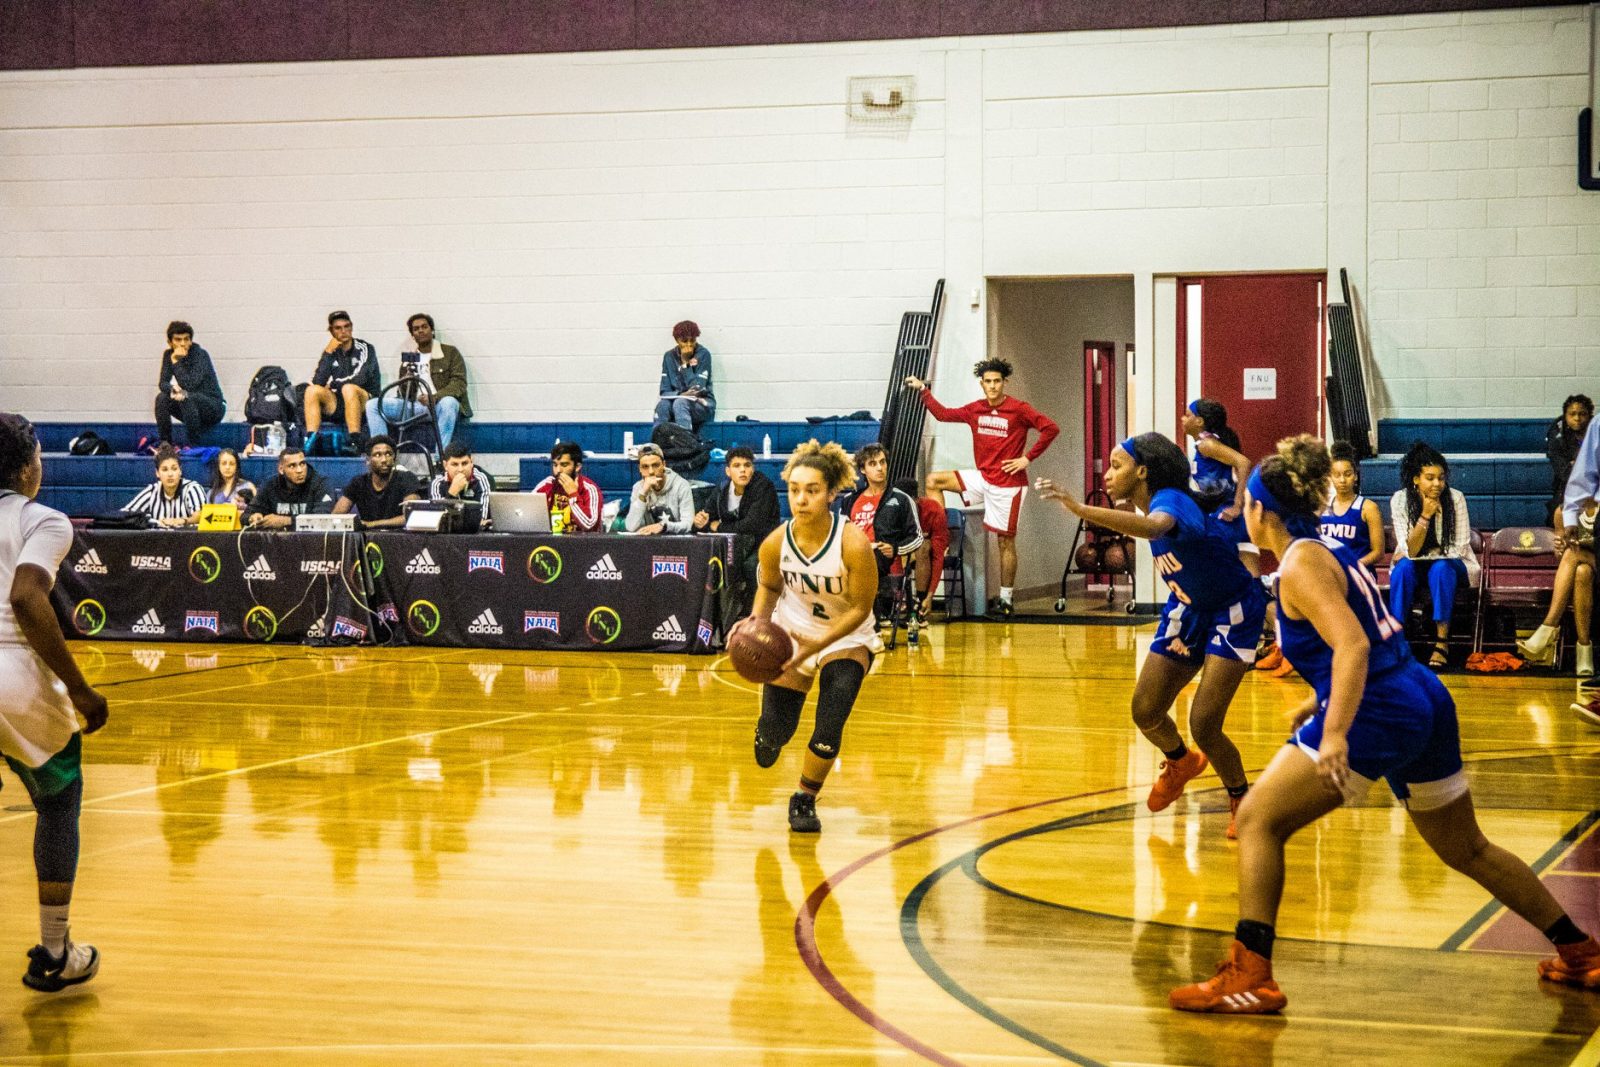 Women's basketball player Adria Stewart dribbling the ball